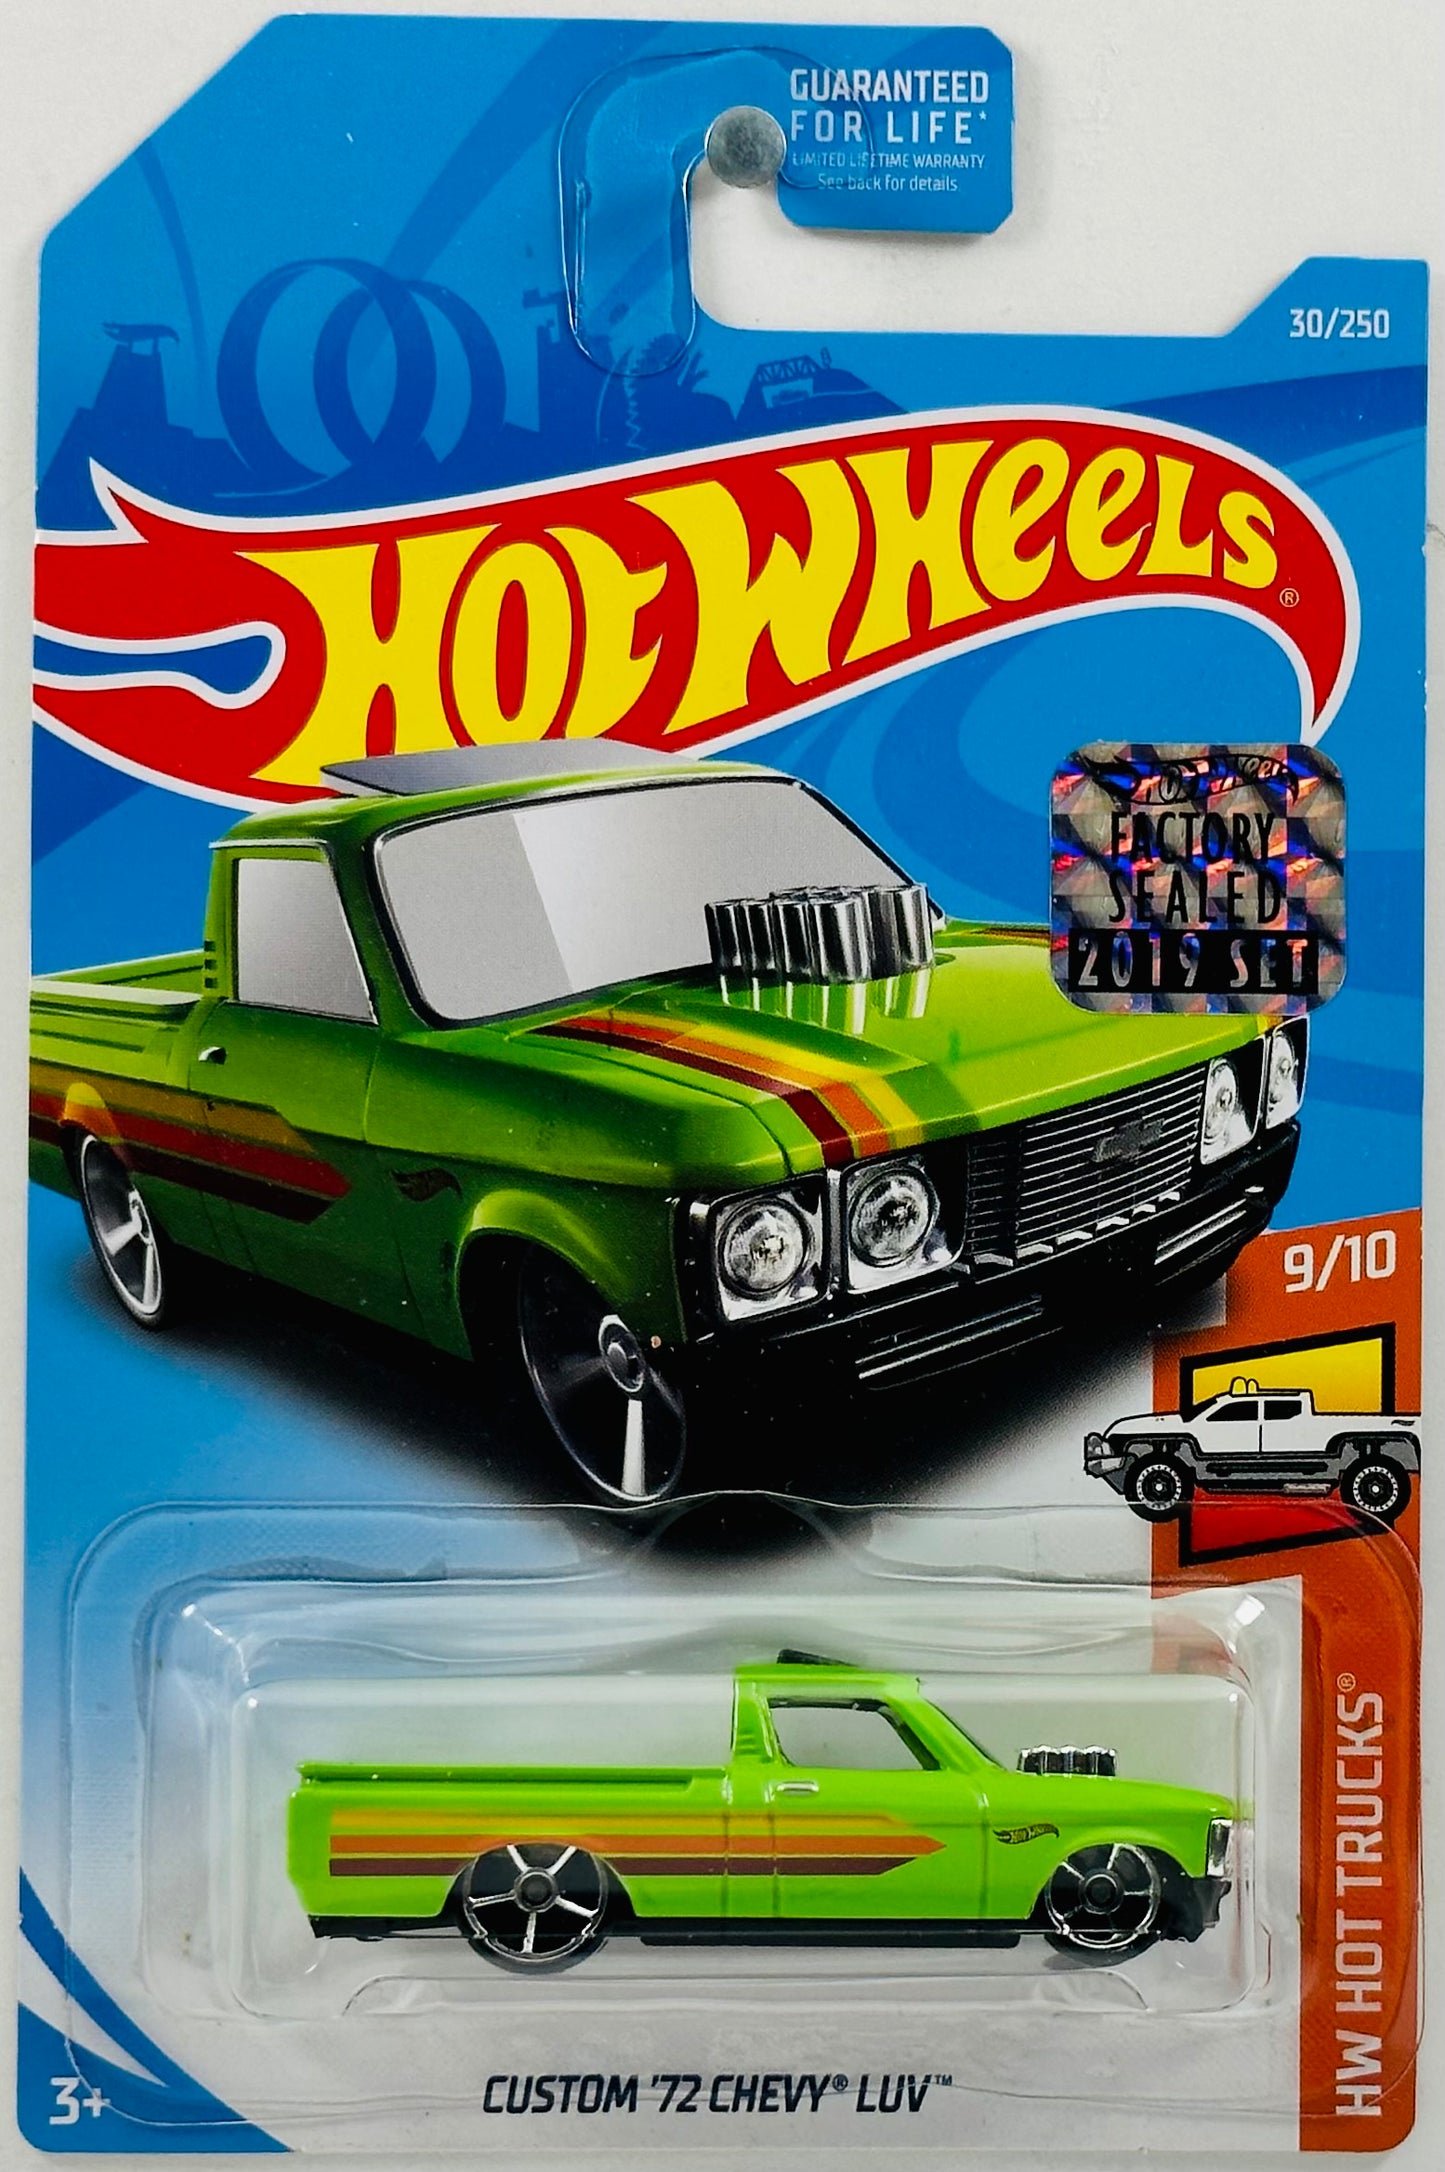 Hot Wheels 2019 - Collector # 030/250 - HW Hot Trucks 9/10 - Custom '72 Chevy LUV - Green - FSC